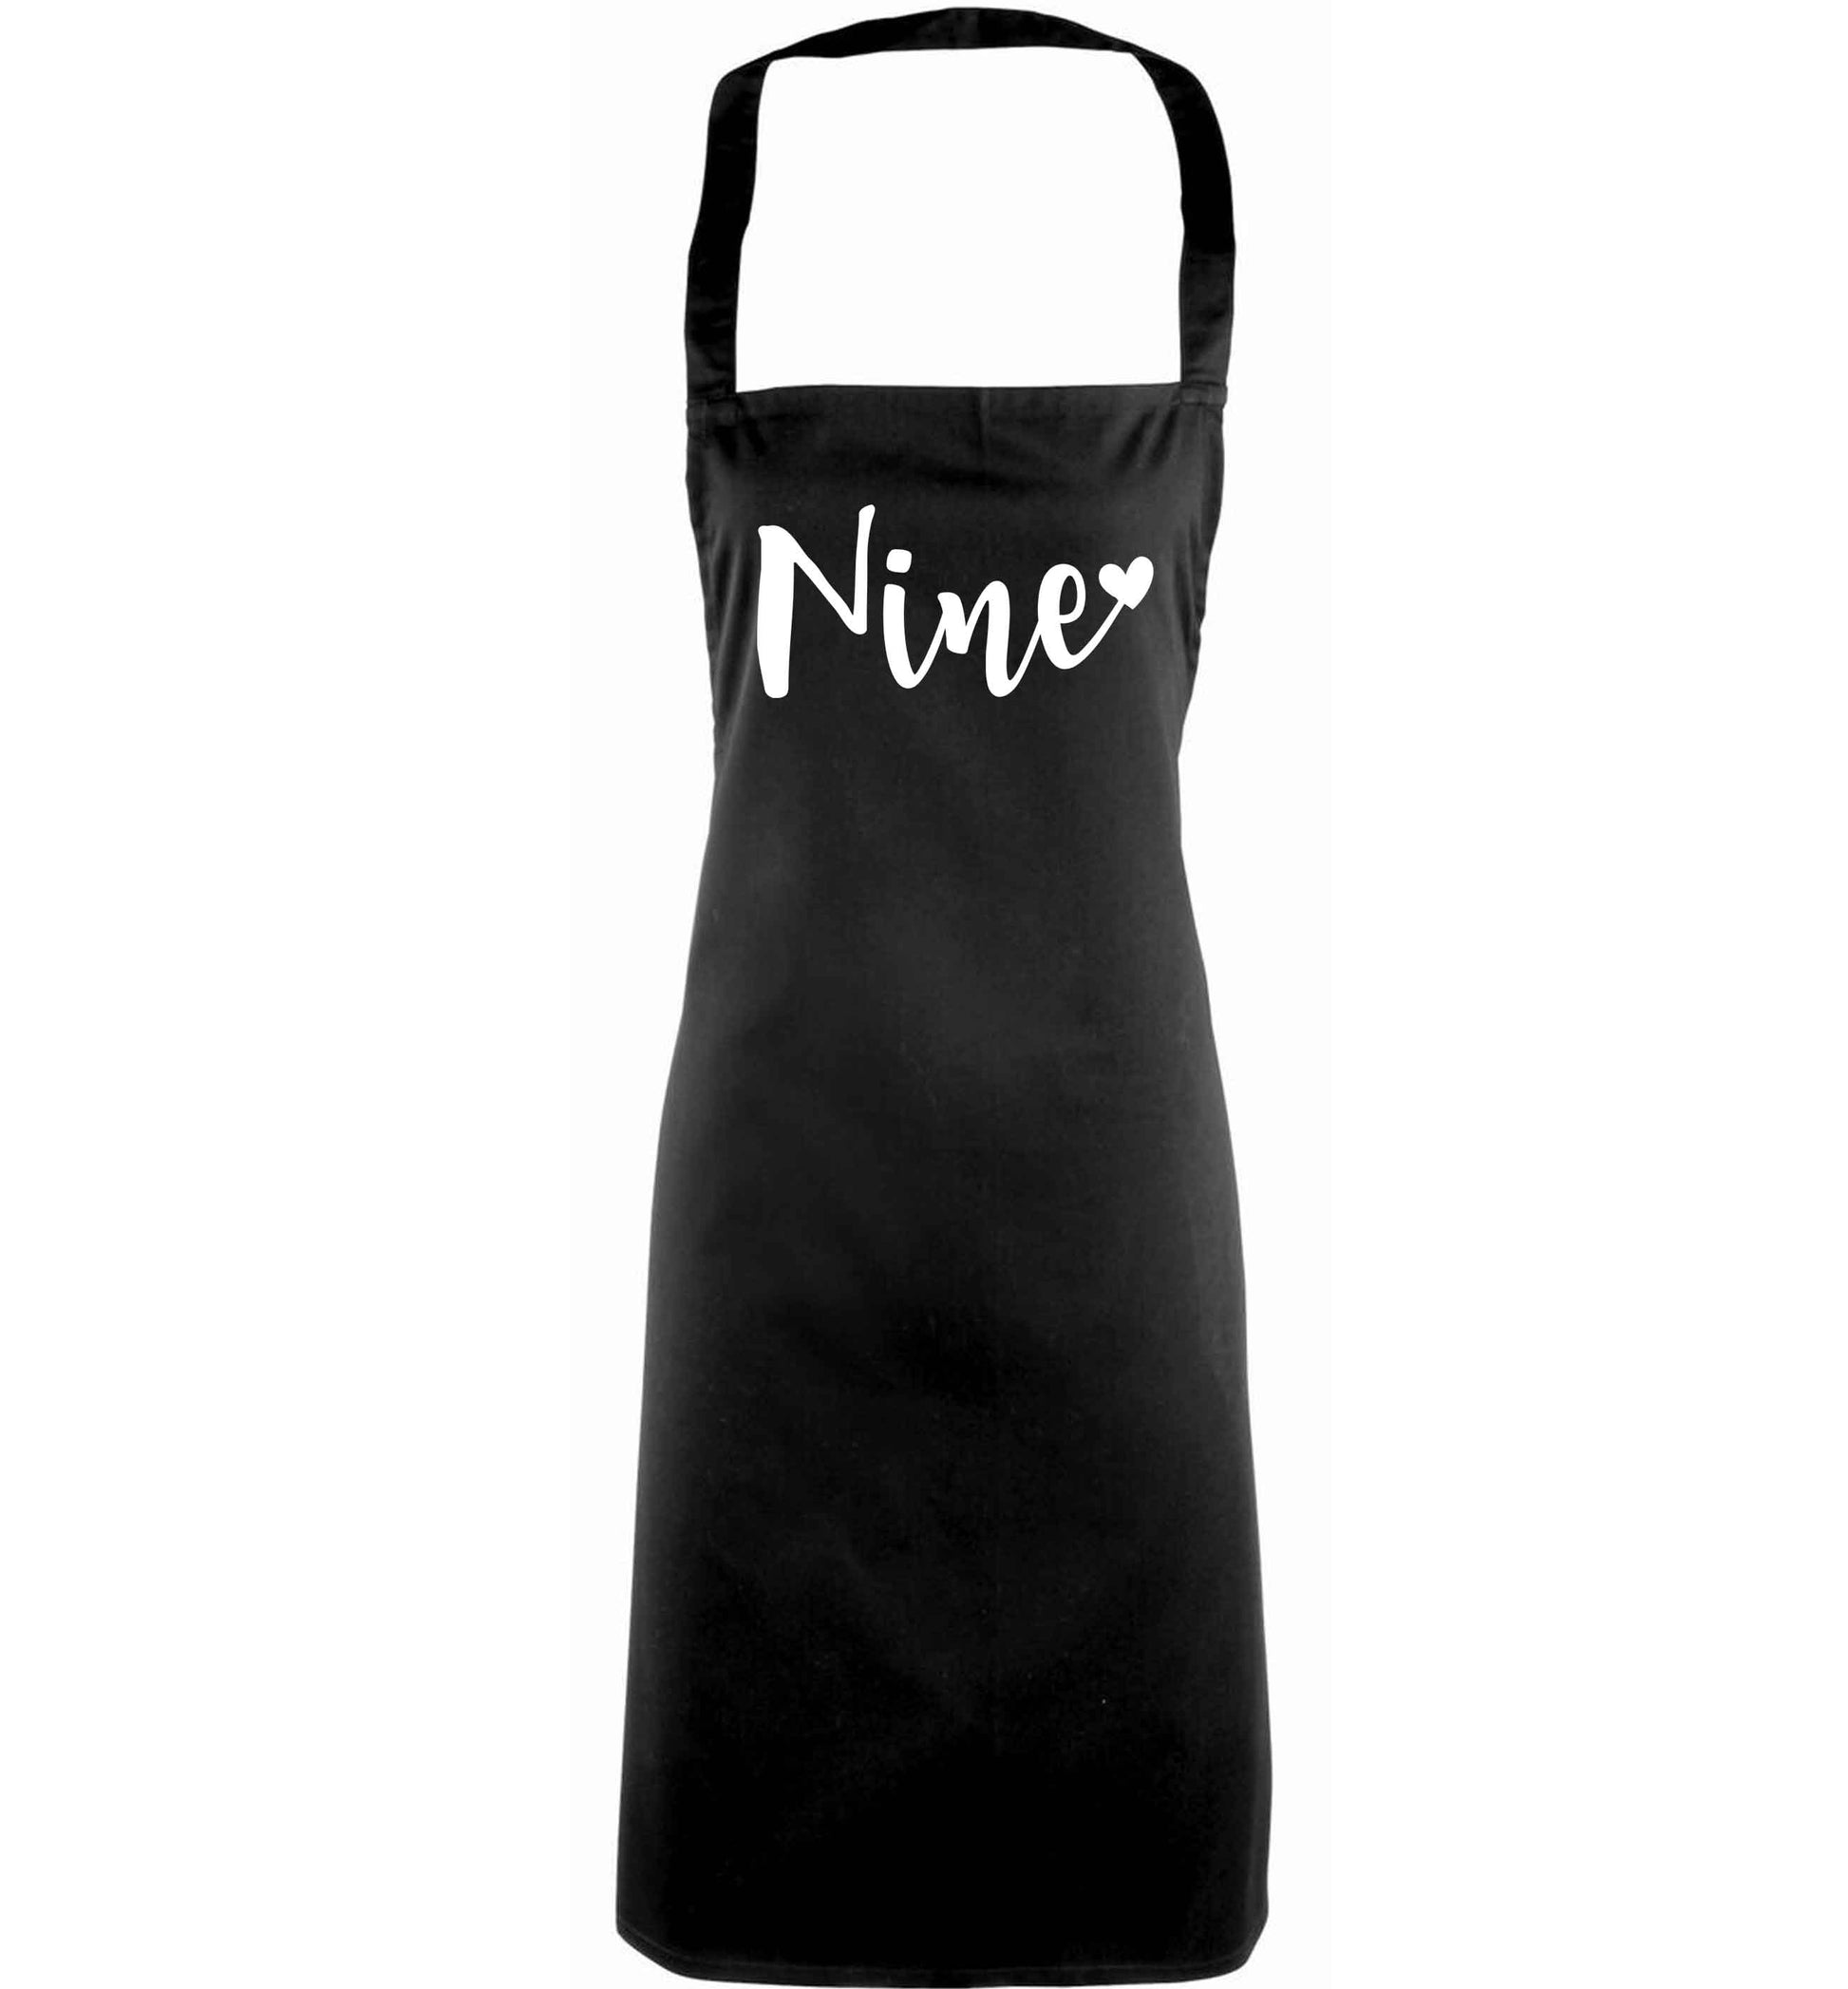 Nine and heart adults black apron